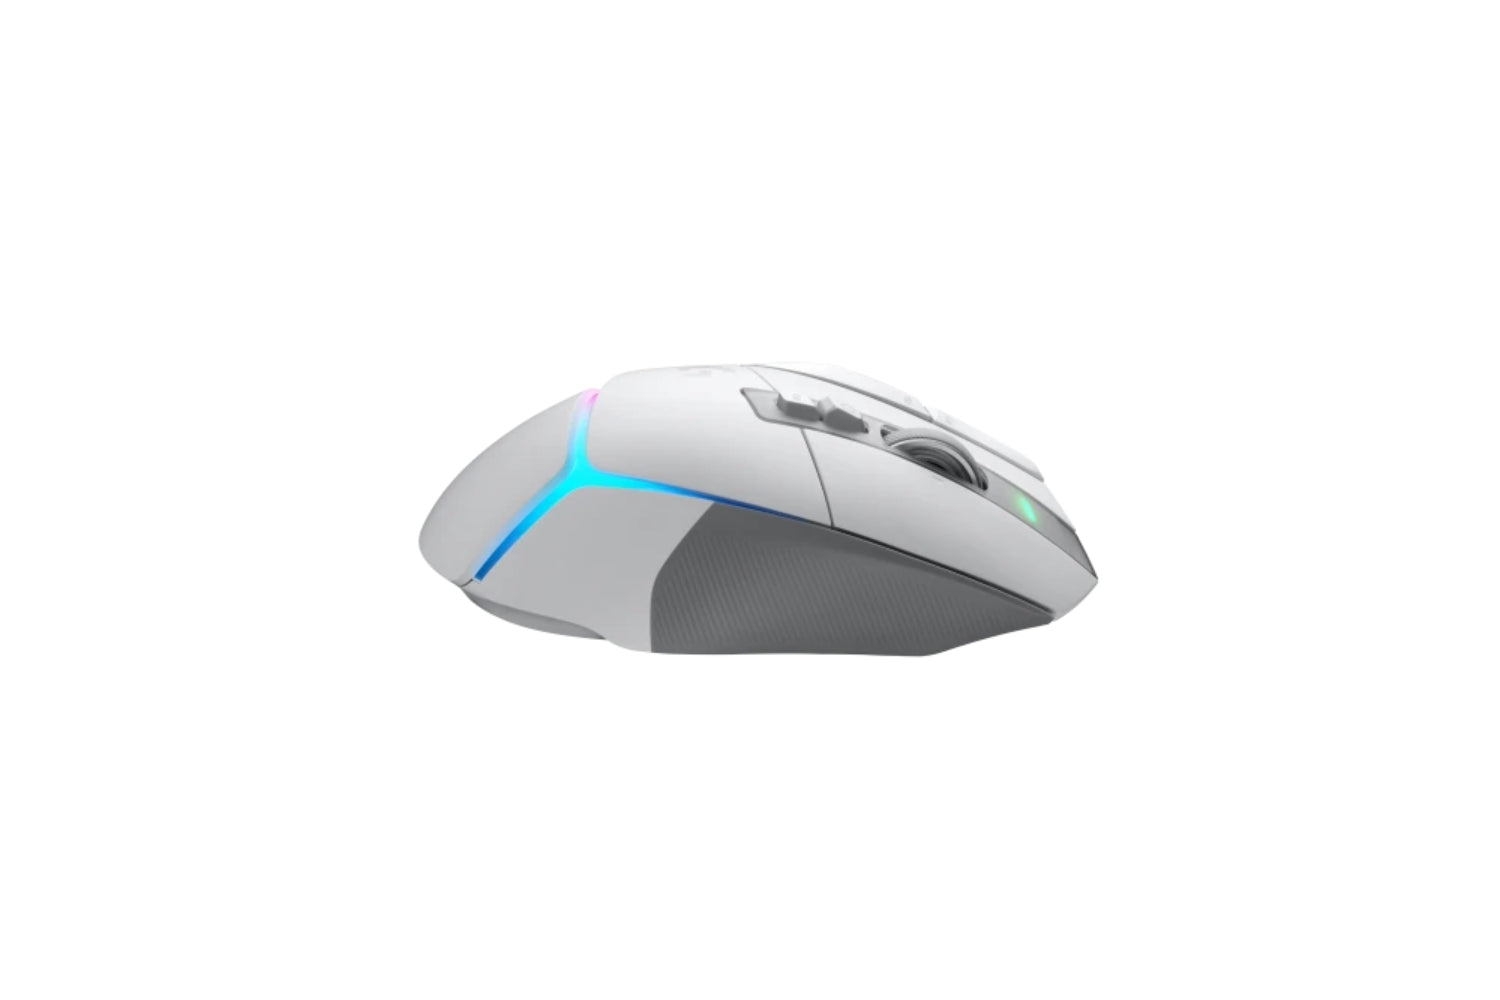  Logitech G502 X PLUS LIGHTSPEED Wireless Optical mouse with  LIGHTFORCE hybrid switches, LIGHTSYNC RGB, HERO 25K gaming sensor,  compatible with PC - macOS/Windows - Black (Renewed) : Video Games